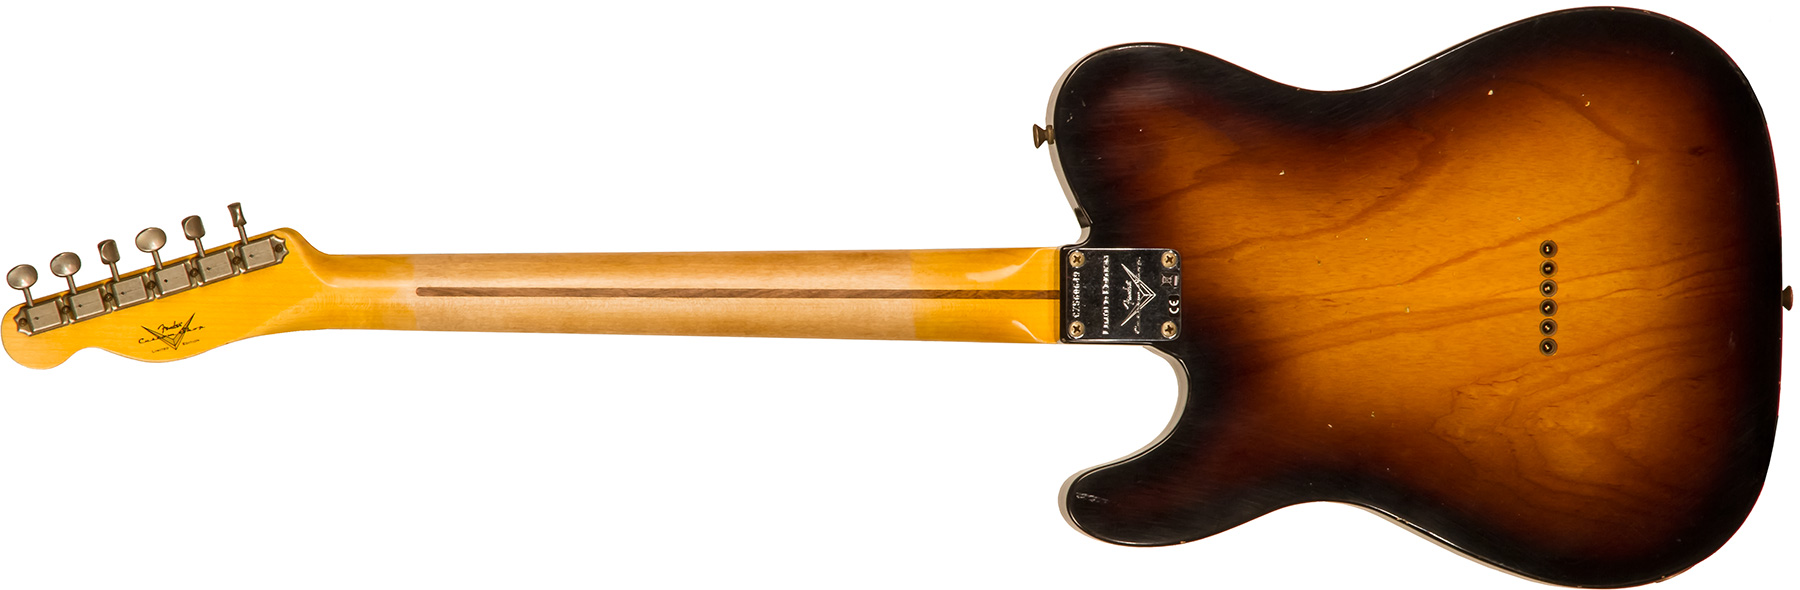 Fender Custom Shop Tele 1955 Ltd 2s Ht Mn #cz560649 - Relic Wide Fade 2-color Sunburst - Tel shape electric guitar - Variation 1